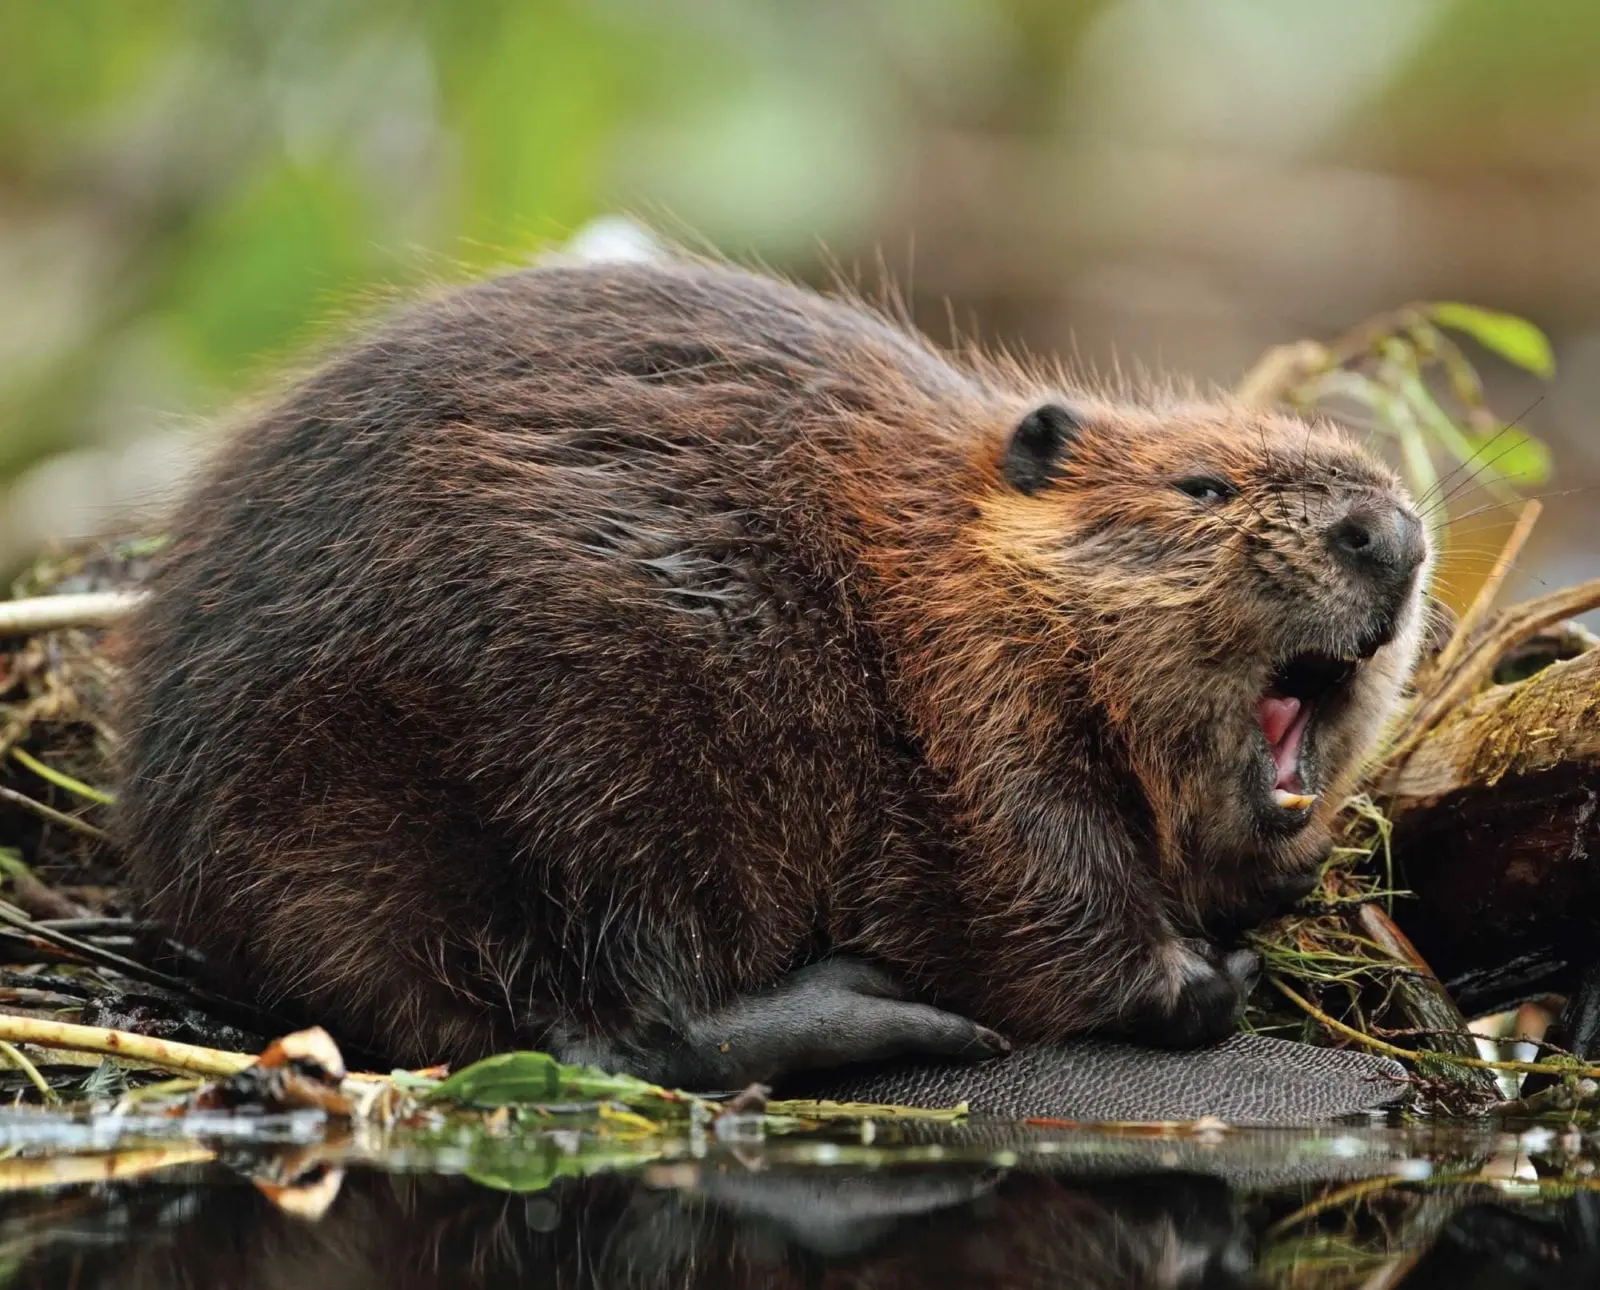 A beaver shows his teeth in defense